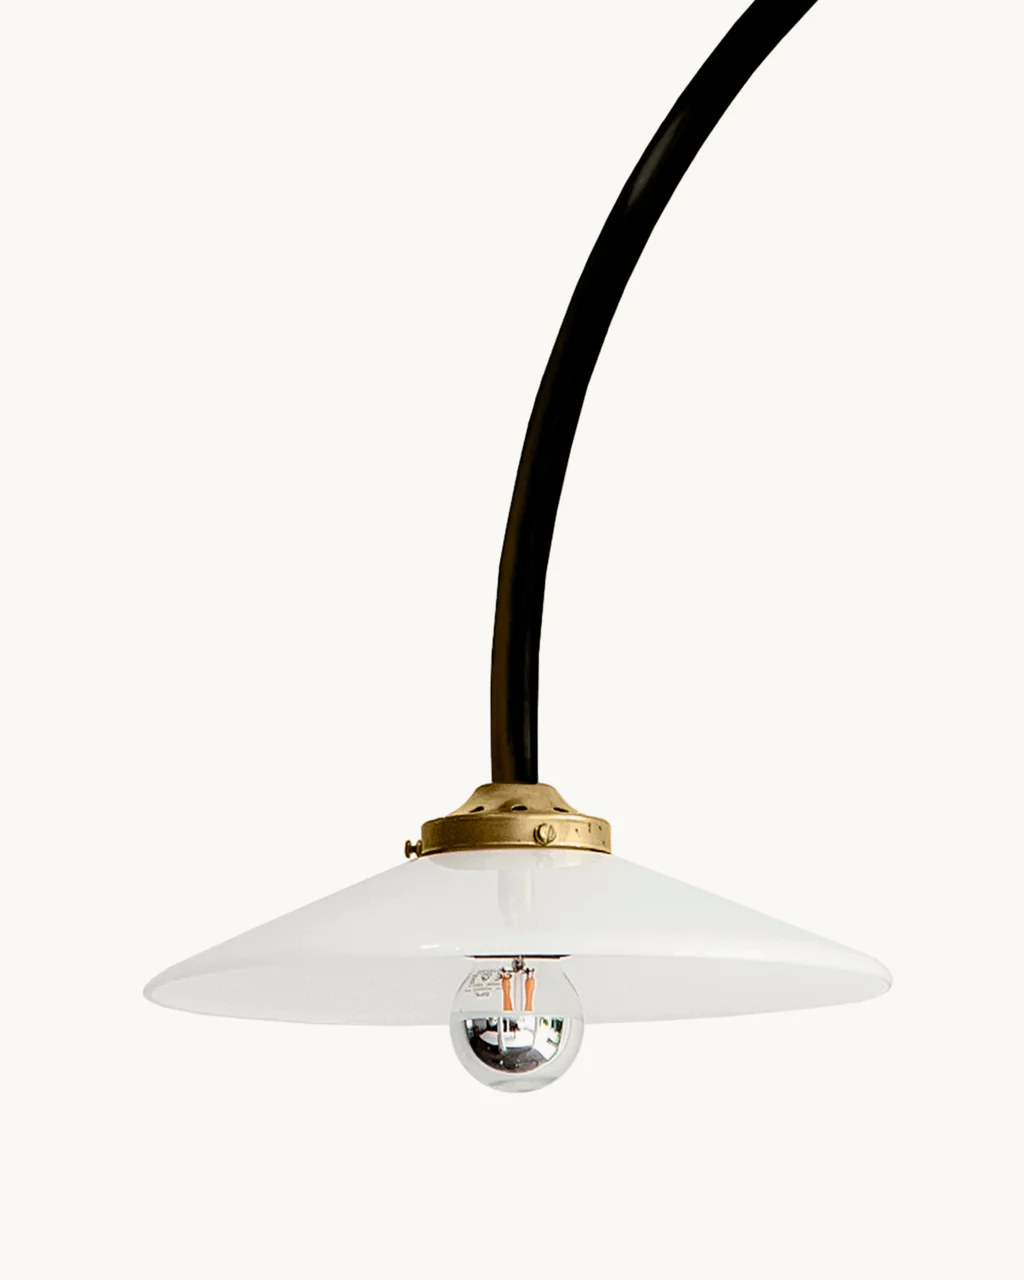 Hanging Lamp n°2, Black, Muller van severen